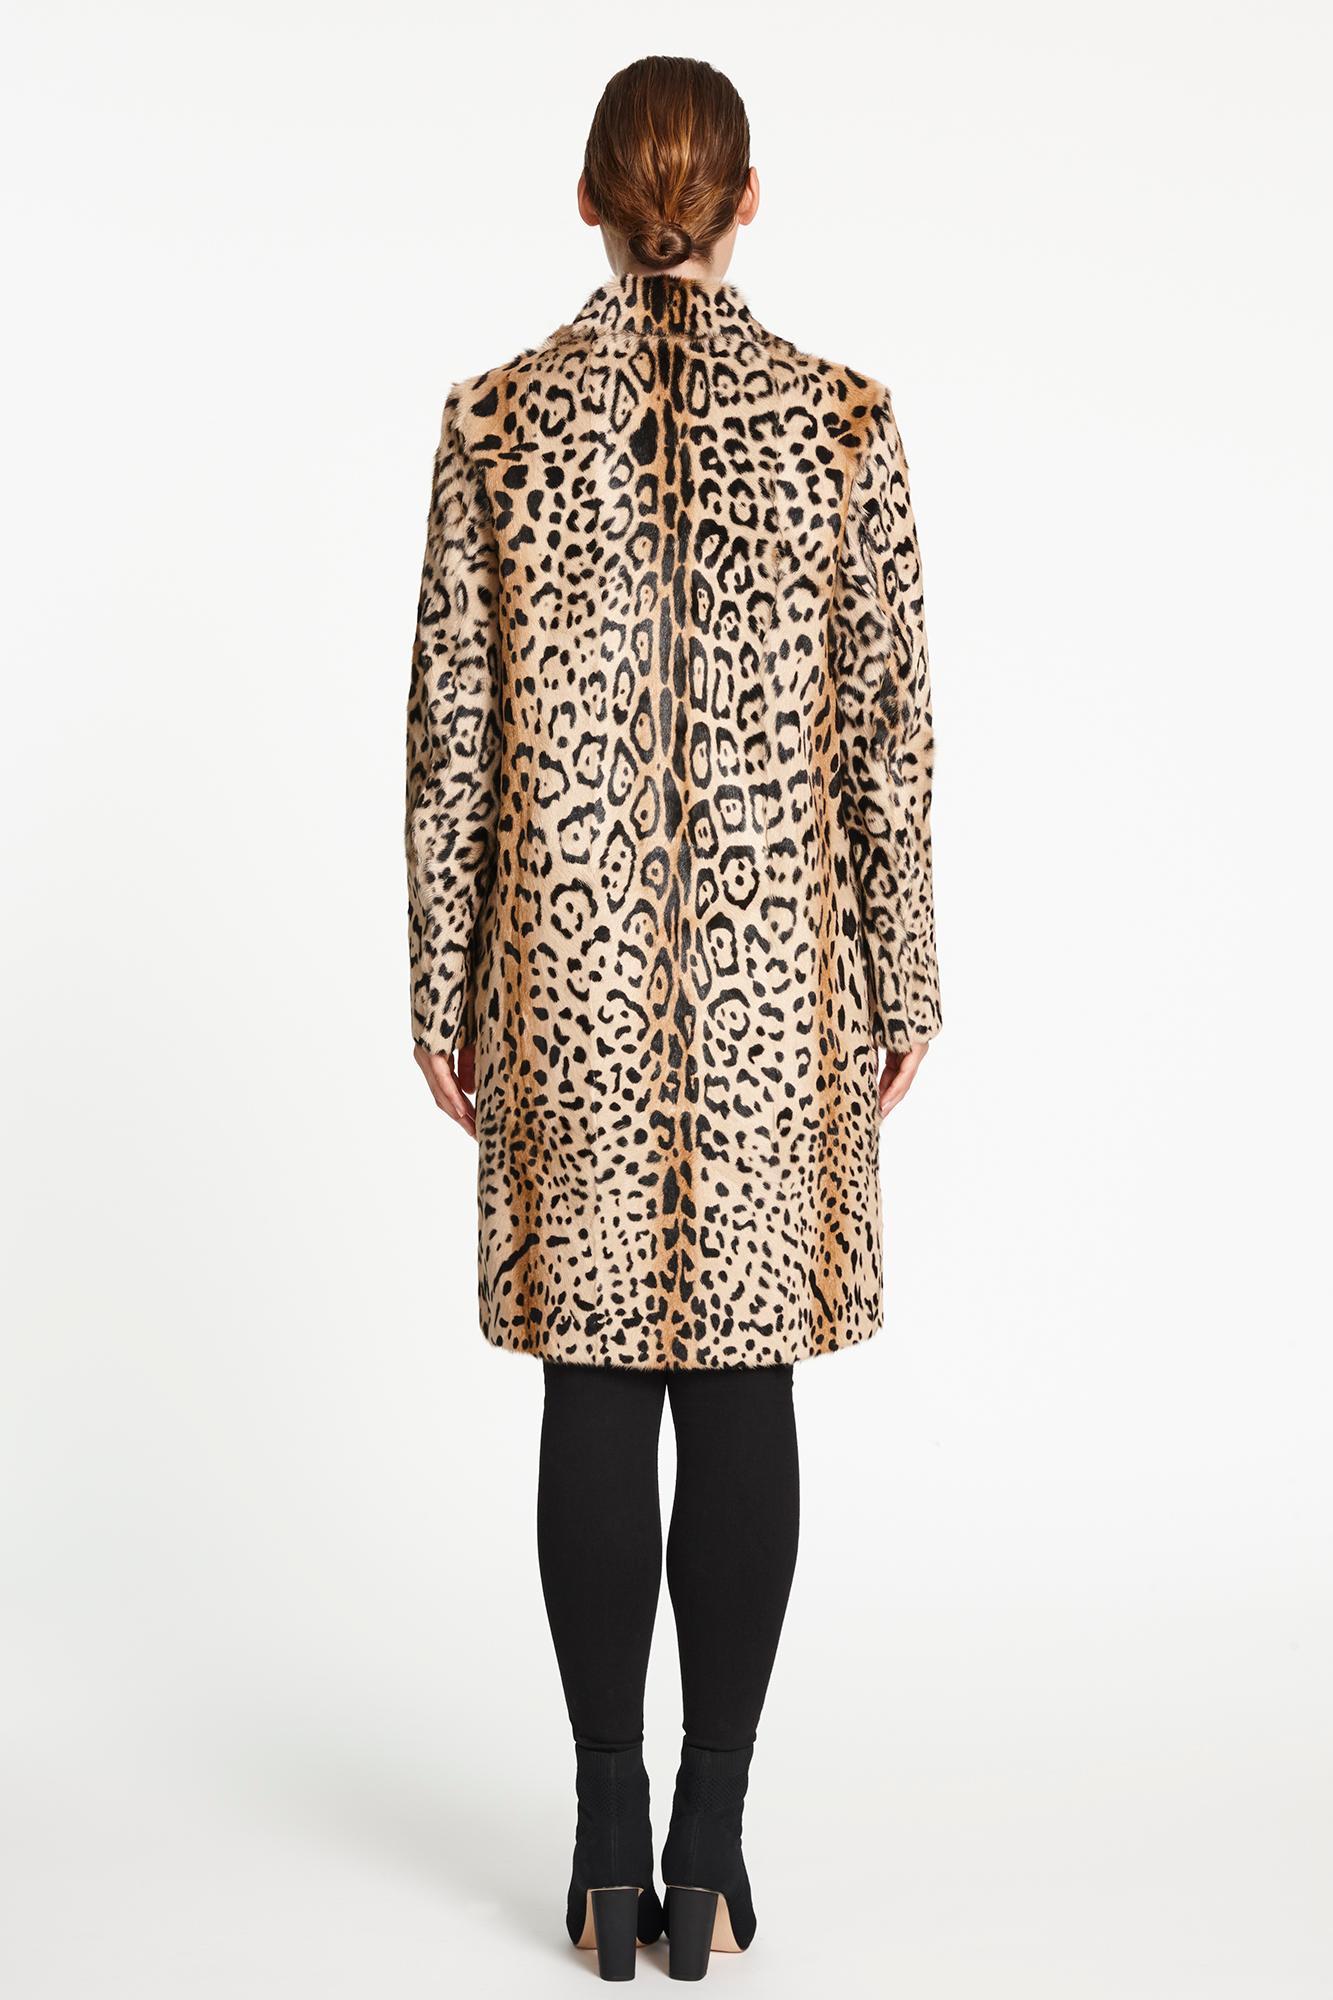 Verheyen London Leopard Print Coat in Red Ruby Goat Hair Fur UK 10 For Sale 6